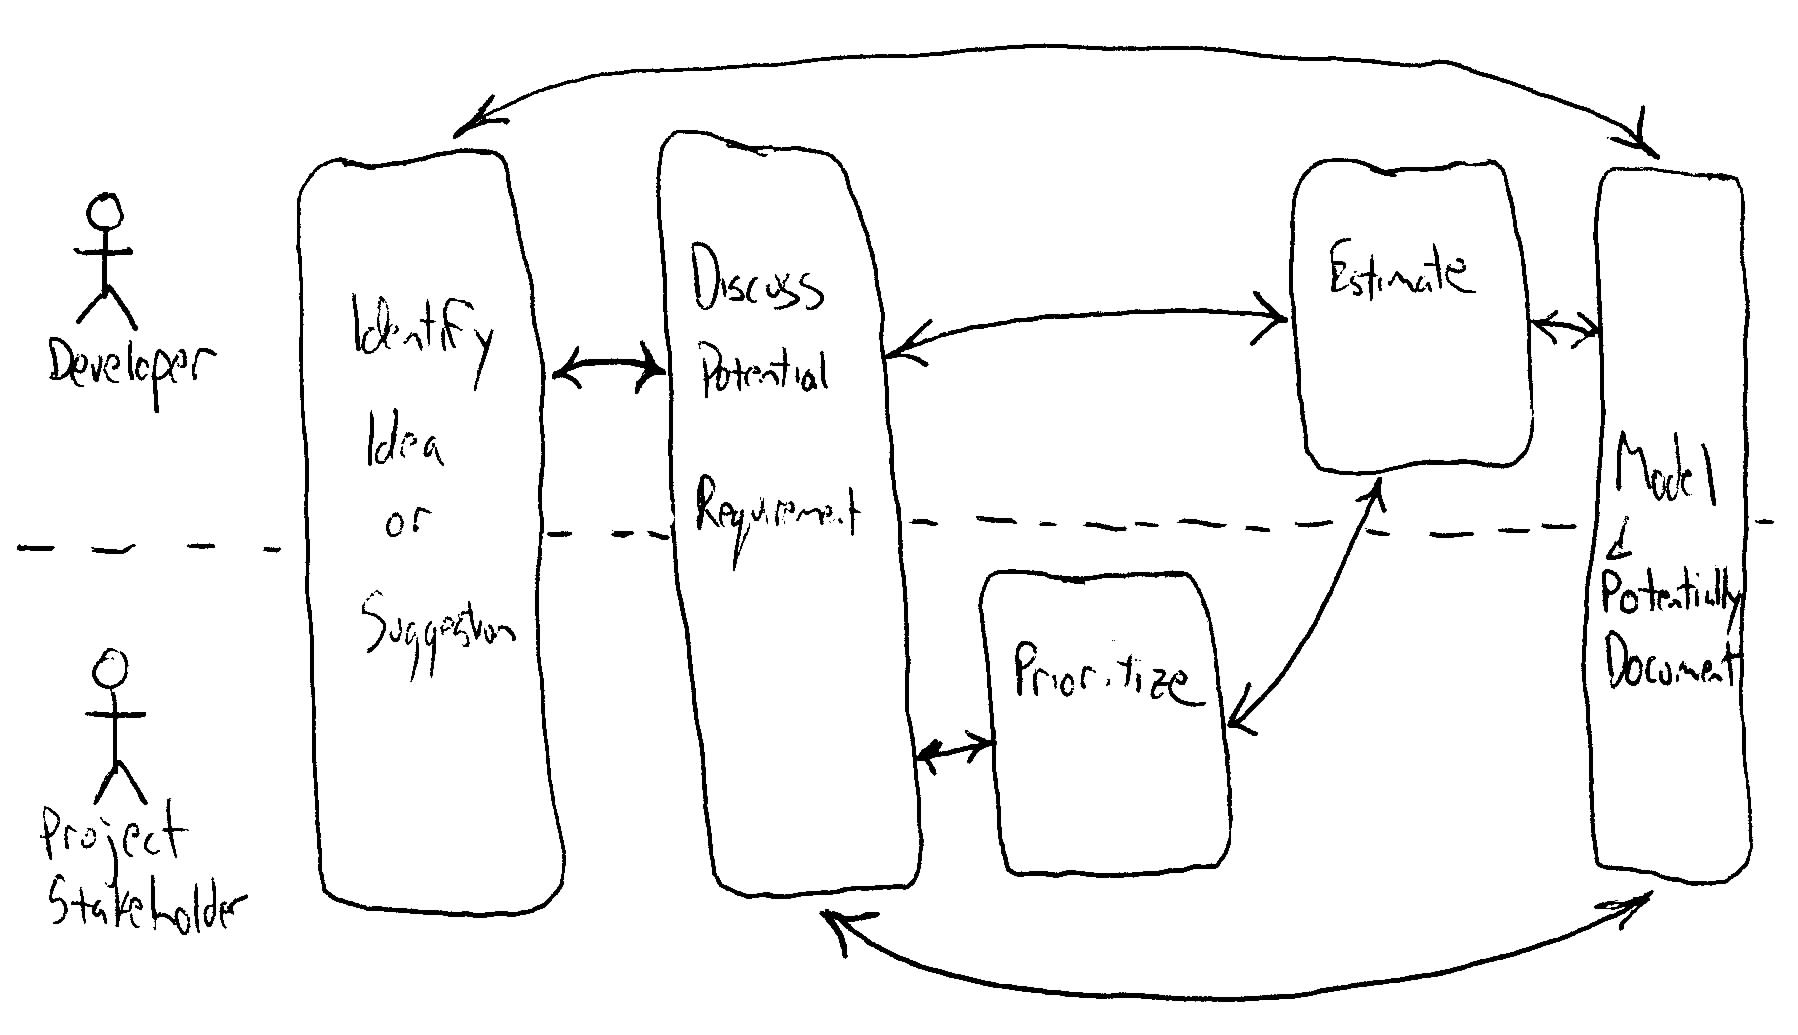 Requirements process diagram (UML Activity Diagram)